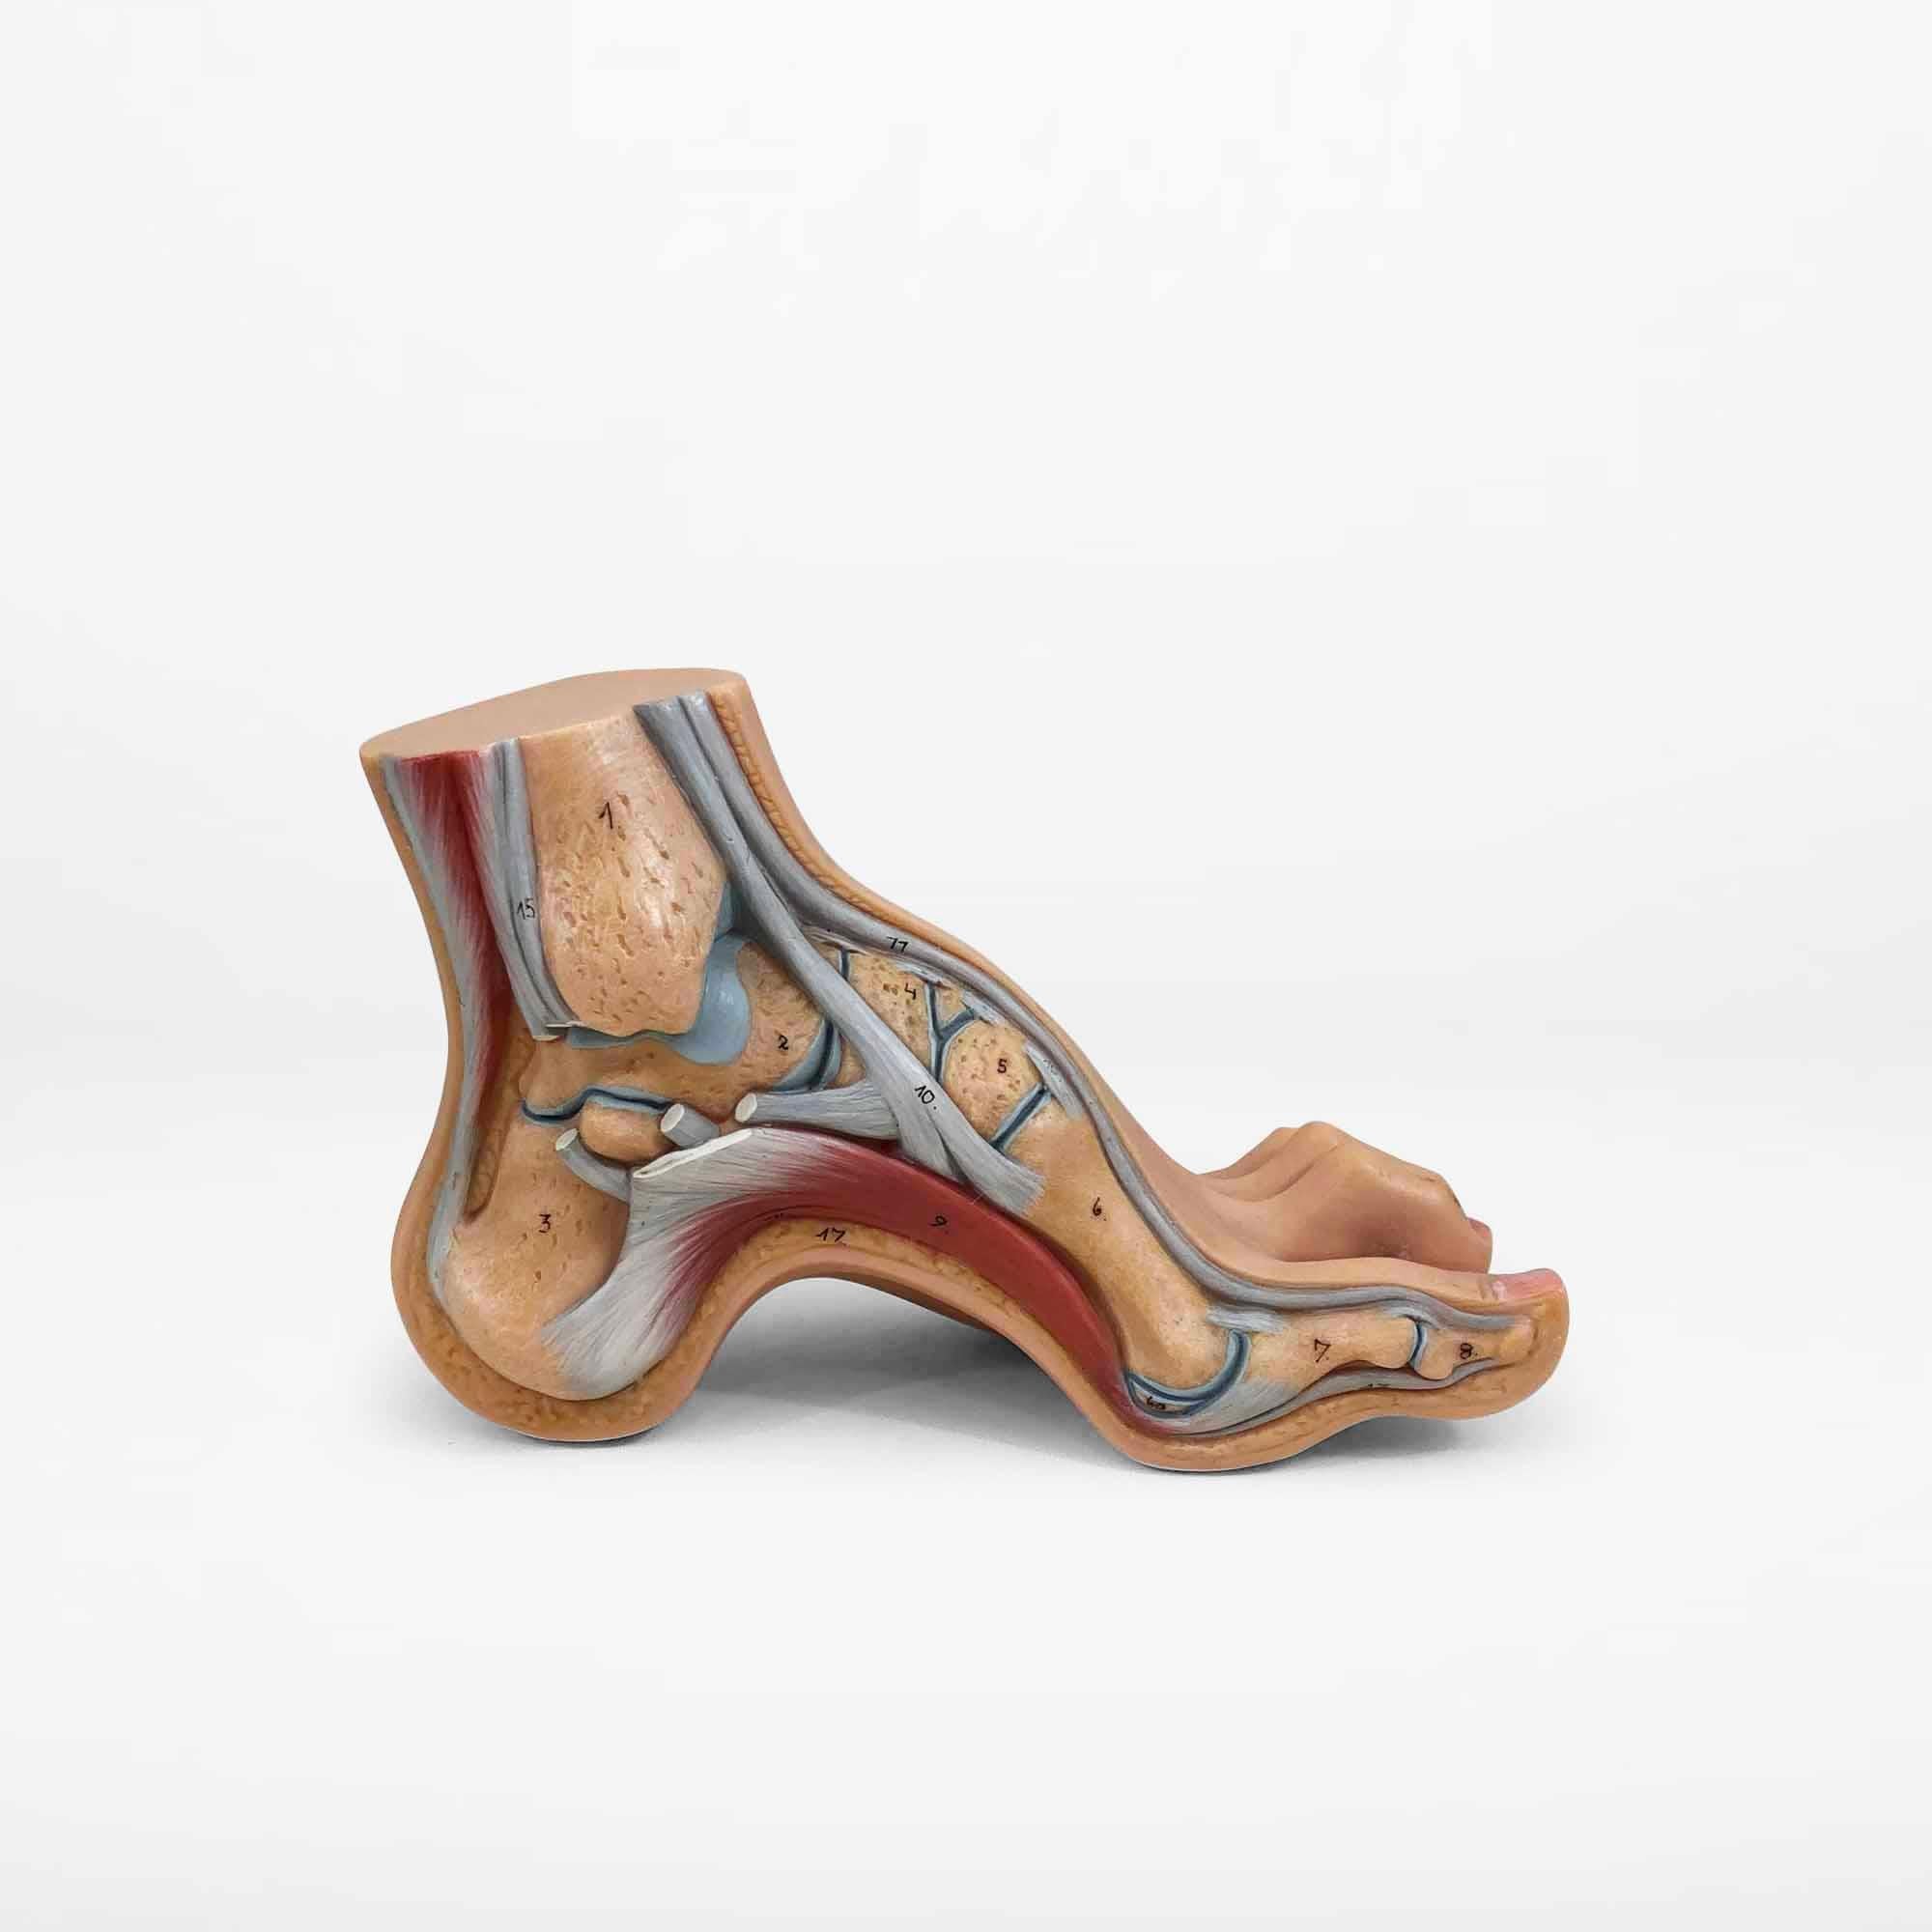 Vintage Anatomical Model of 3 Human Feet, Set of 3 1